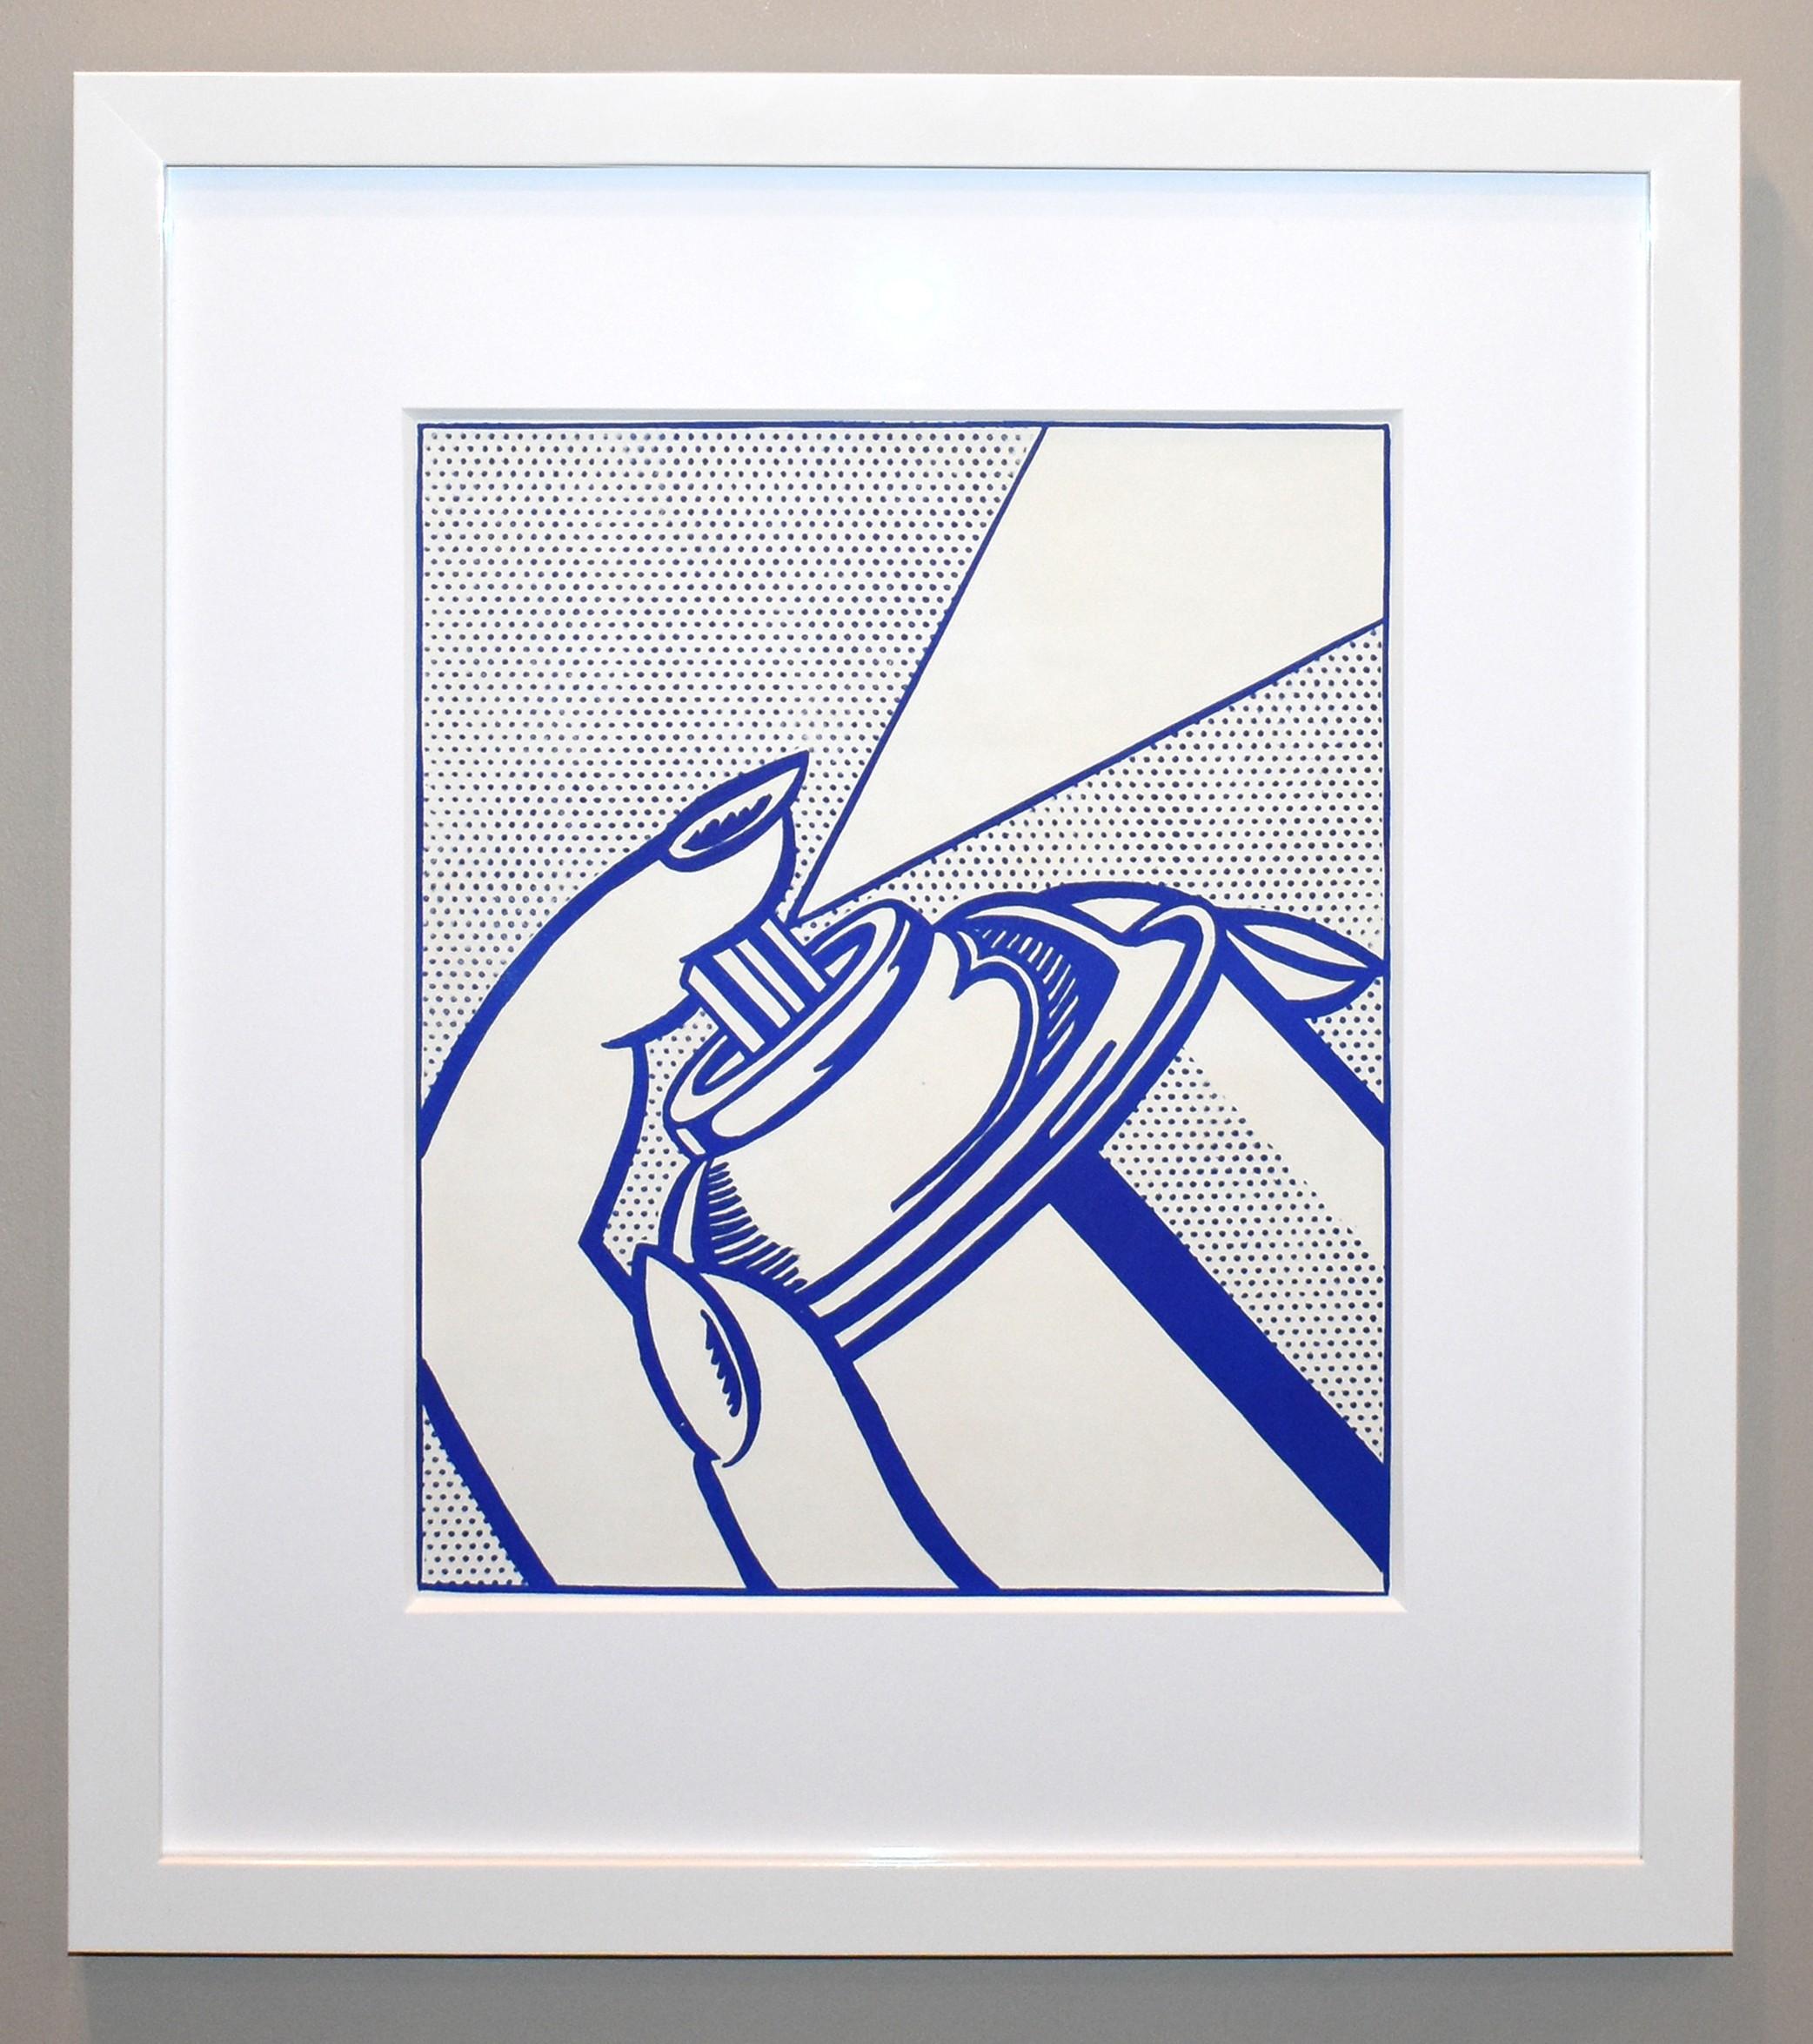 Artist: Roy Lichtenstein
Title: Spray Can
Portfolio: 1¢ Life
Medium: Lithograph on white wove paper
Year: 1963
Edition: 2000
Frame Size: 21 1/4